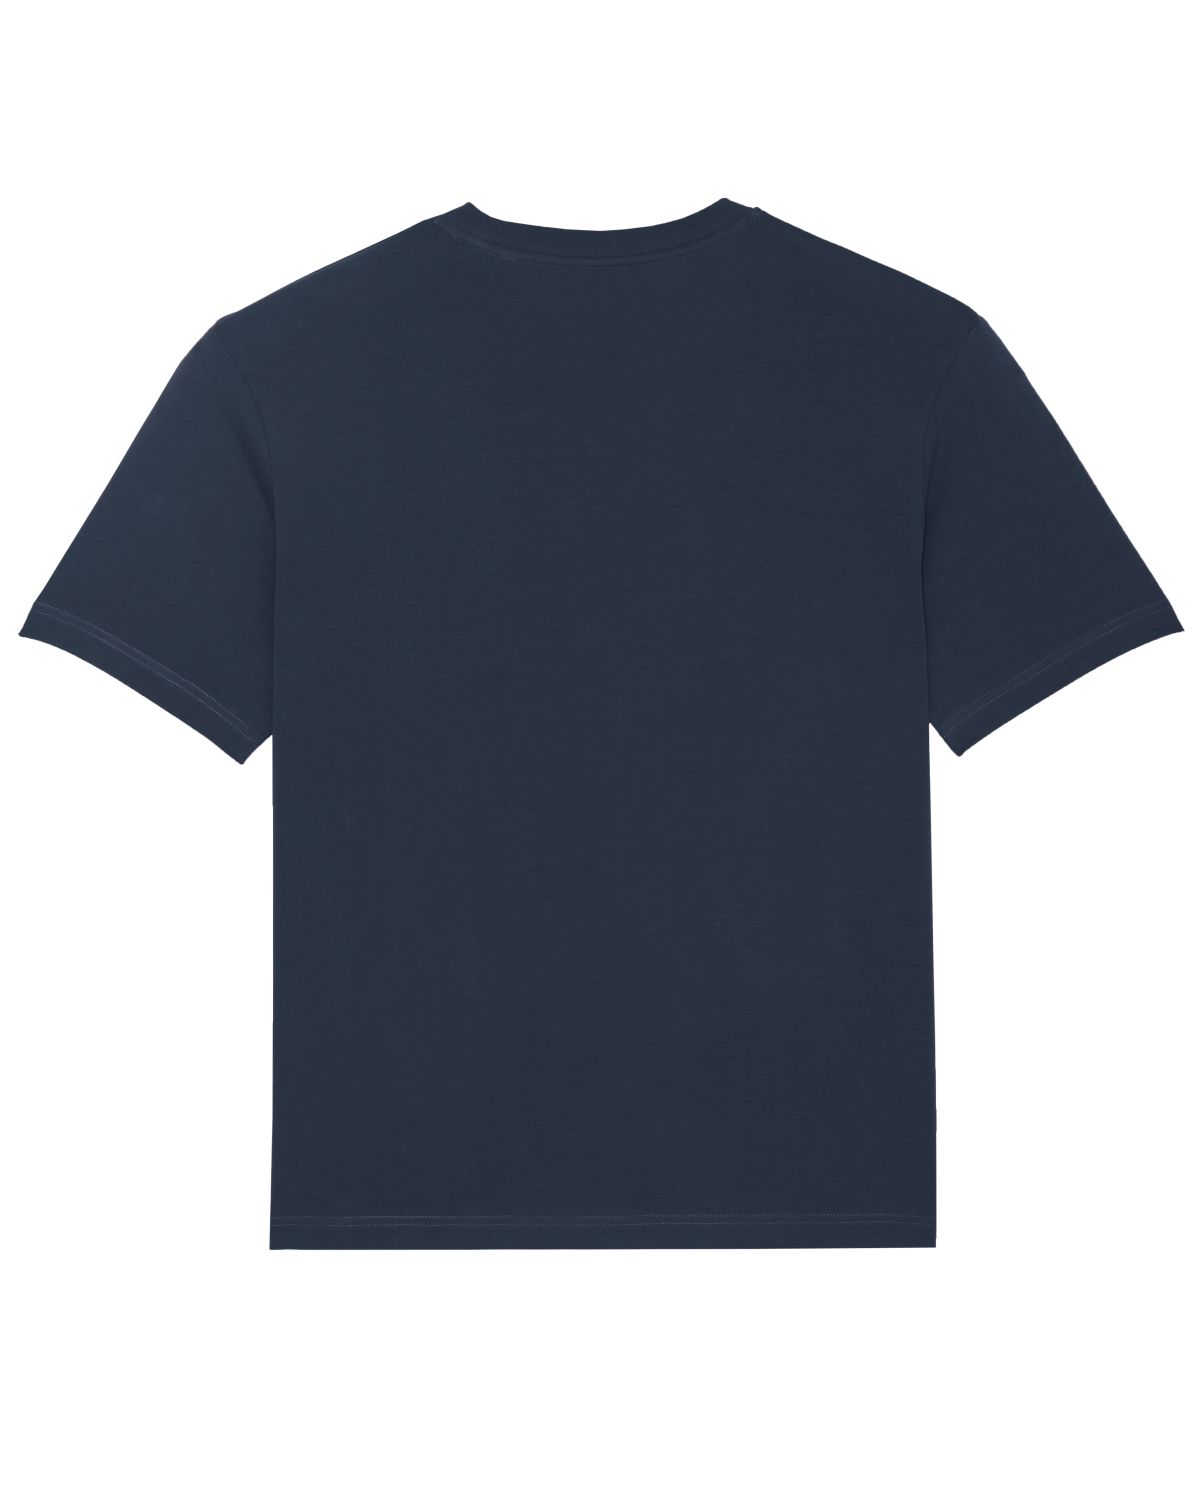 SV Basic T-Shirt - Navy